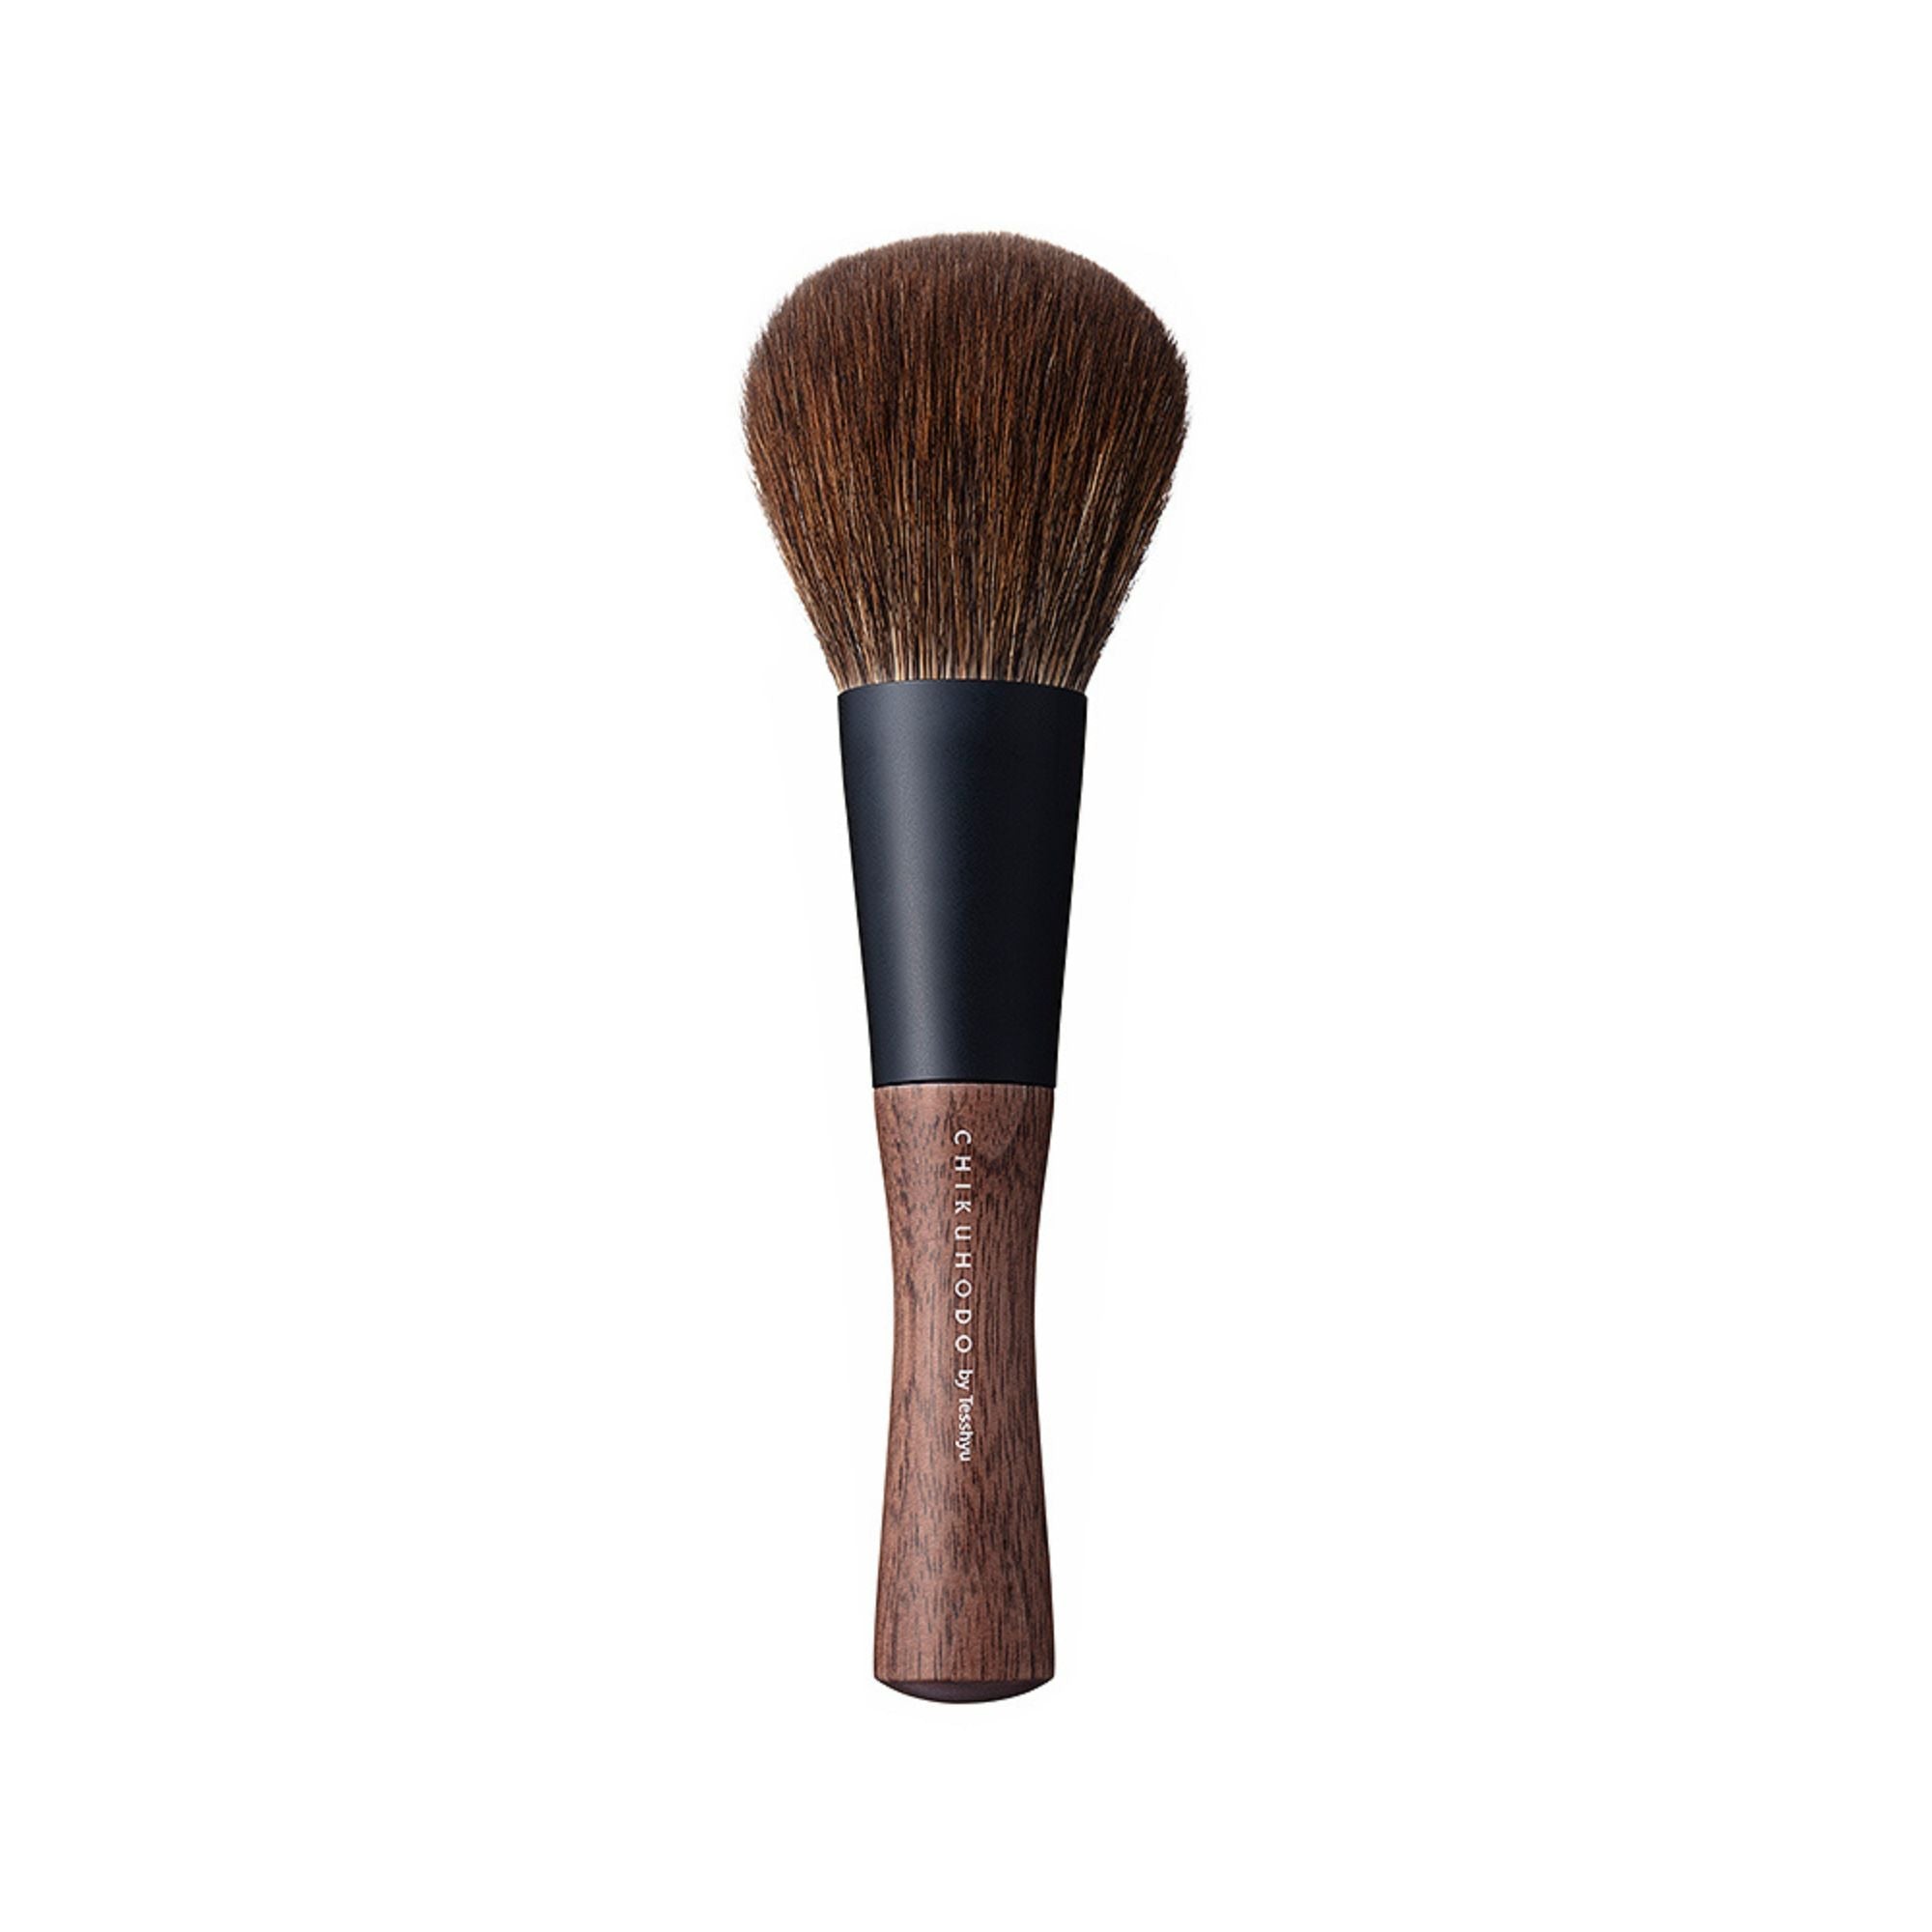 Chikuhodo REN-1 Powder Brush, Ren Series - Fude Beauty, Japanese Makeup Brushes